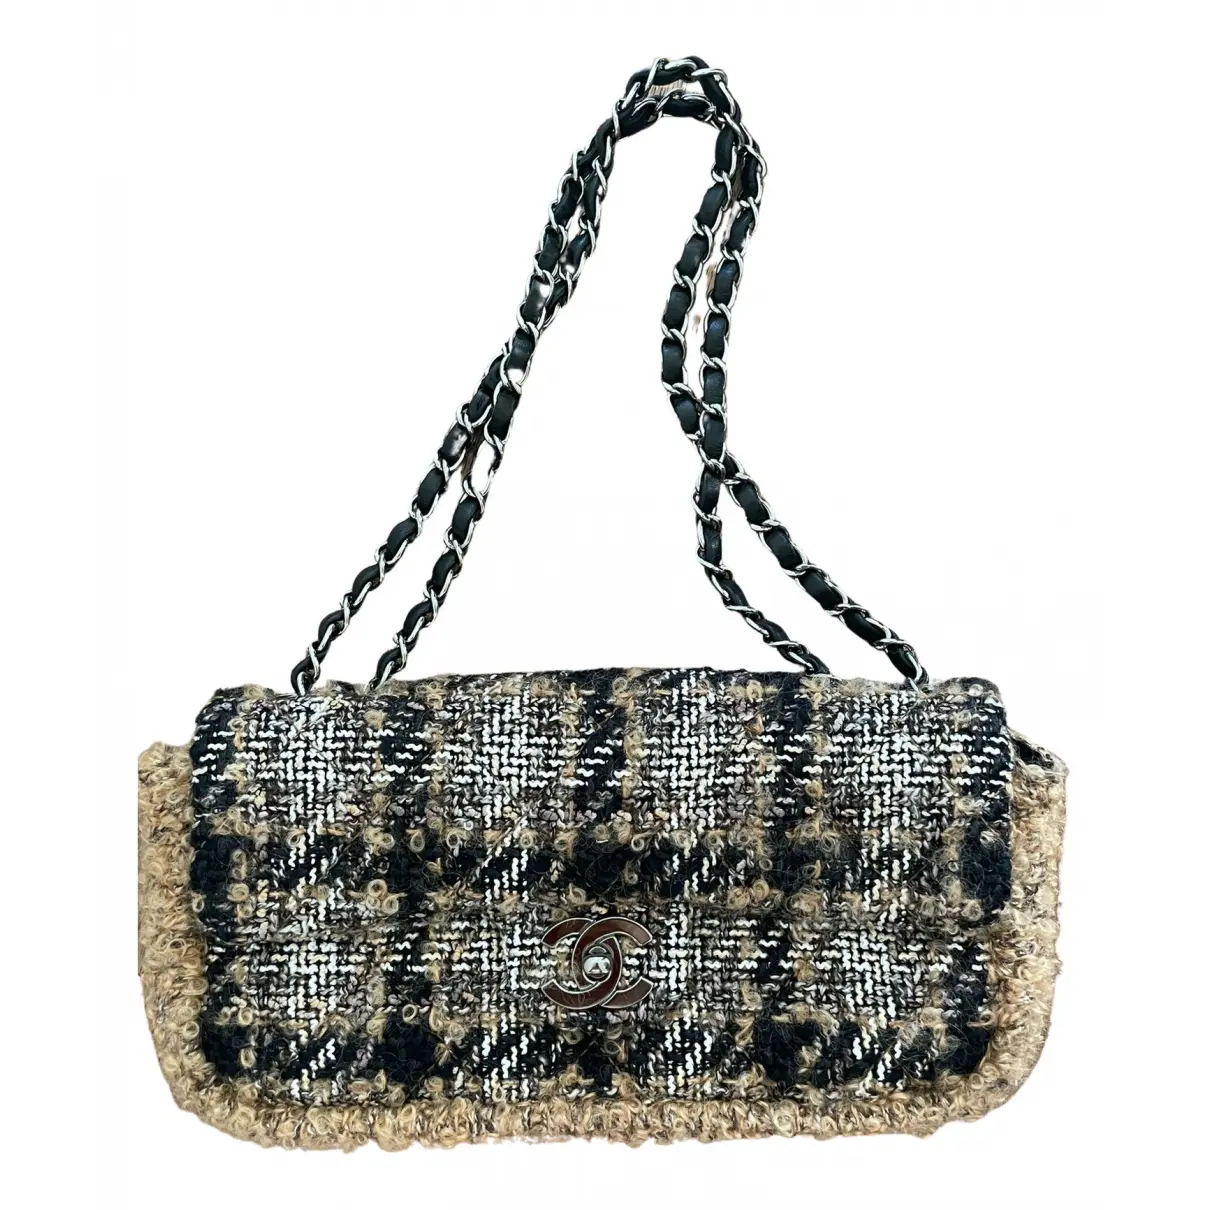 Trendy CC Quilted tweed handbag